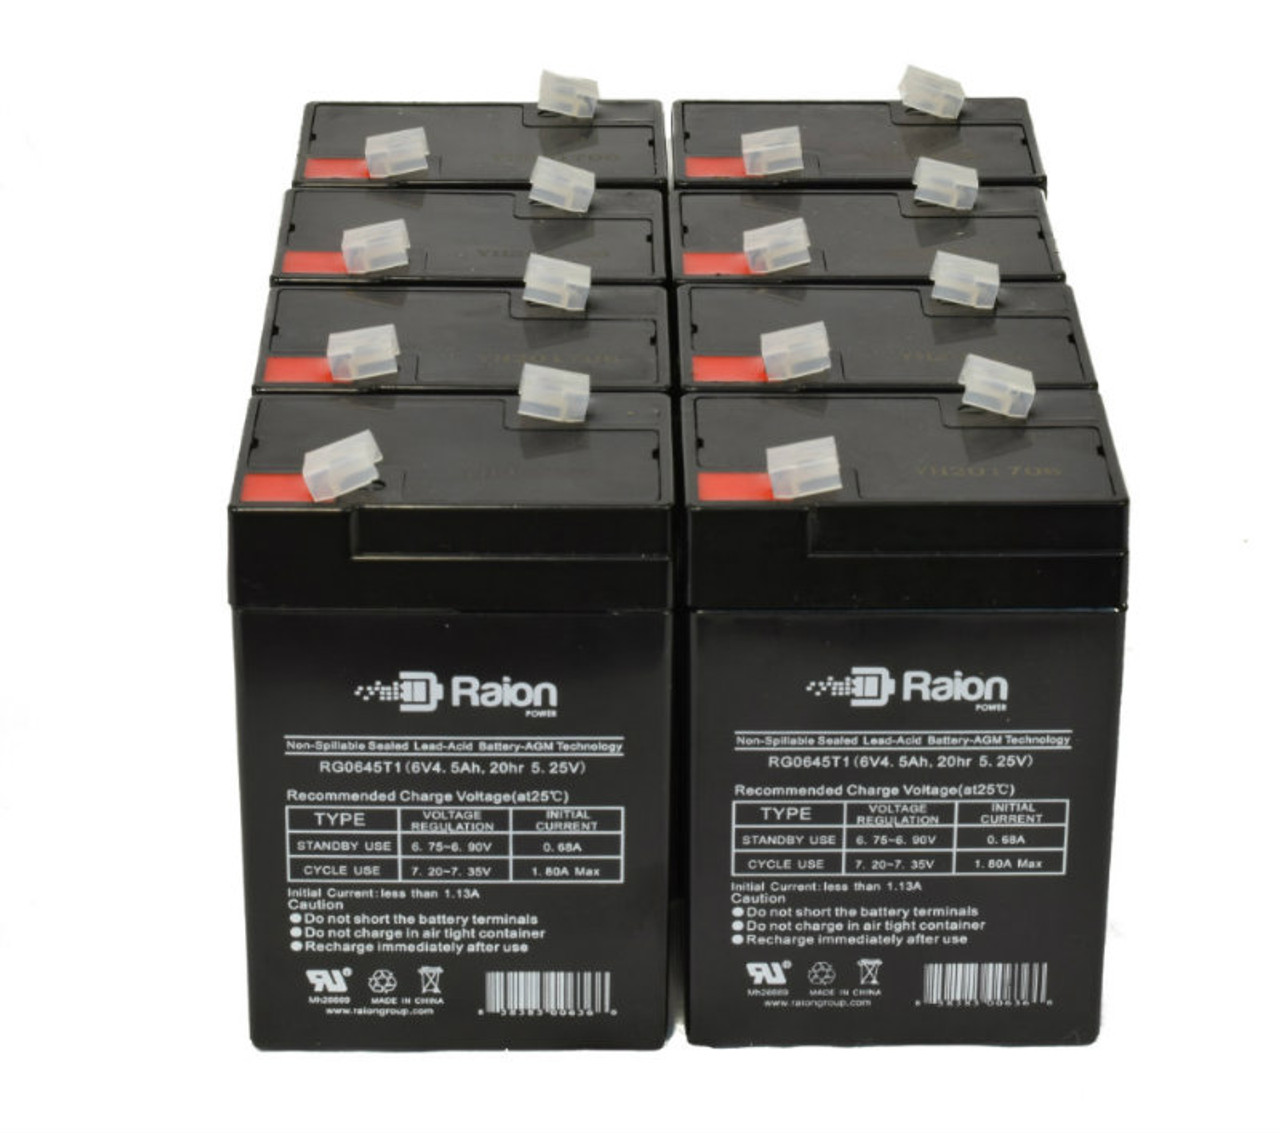 Raion Power 6V 4.5Ah Replacement Emergency Light Battery for Sonnenschein 6V4.6 - 8 Pack